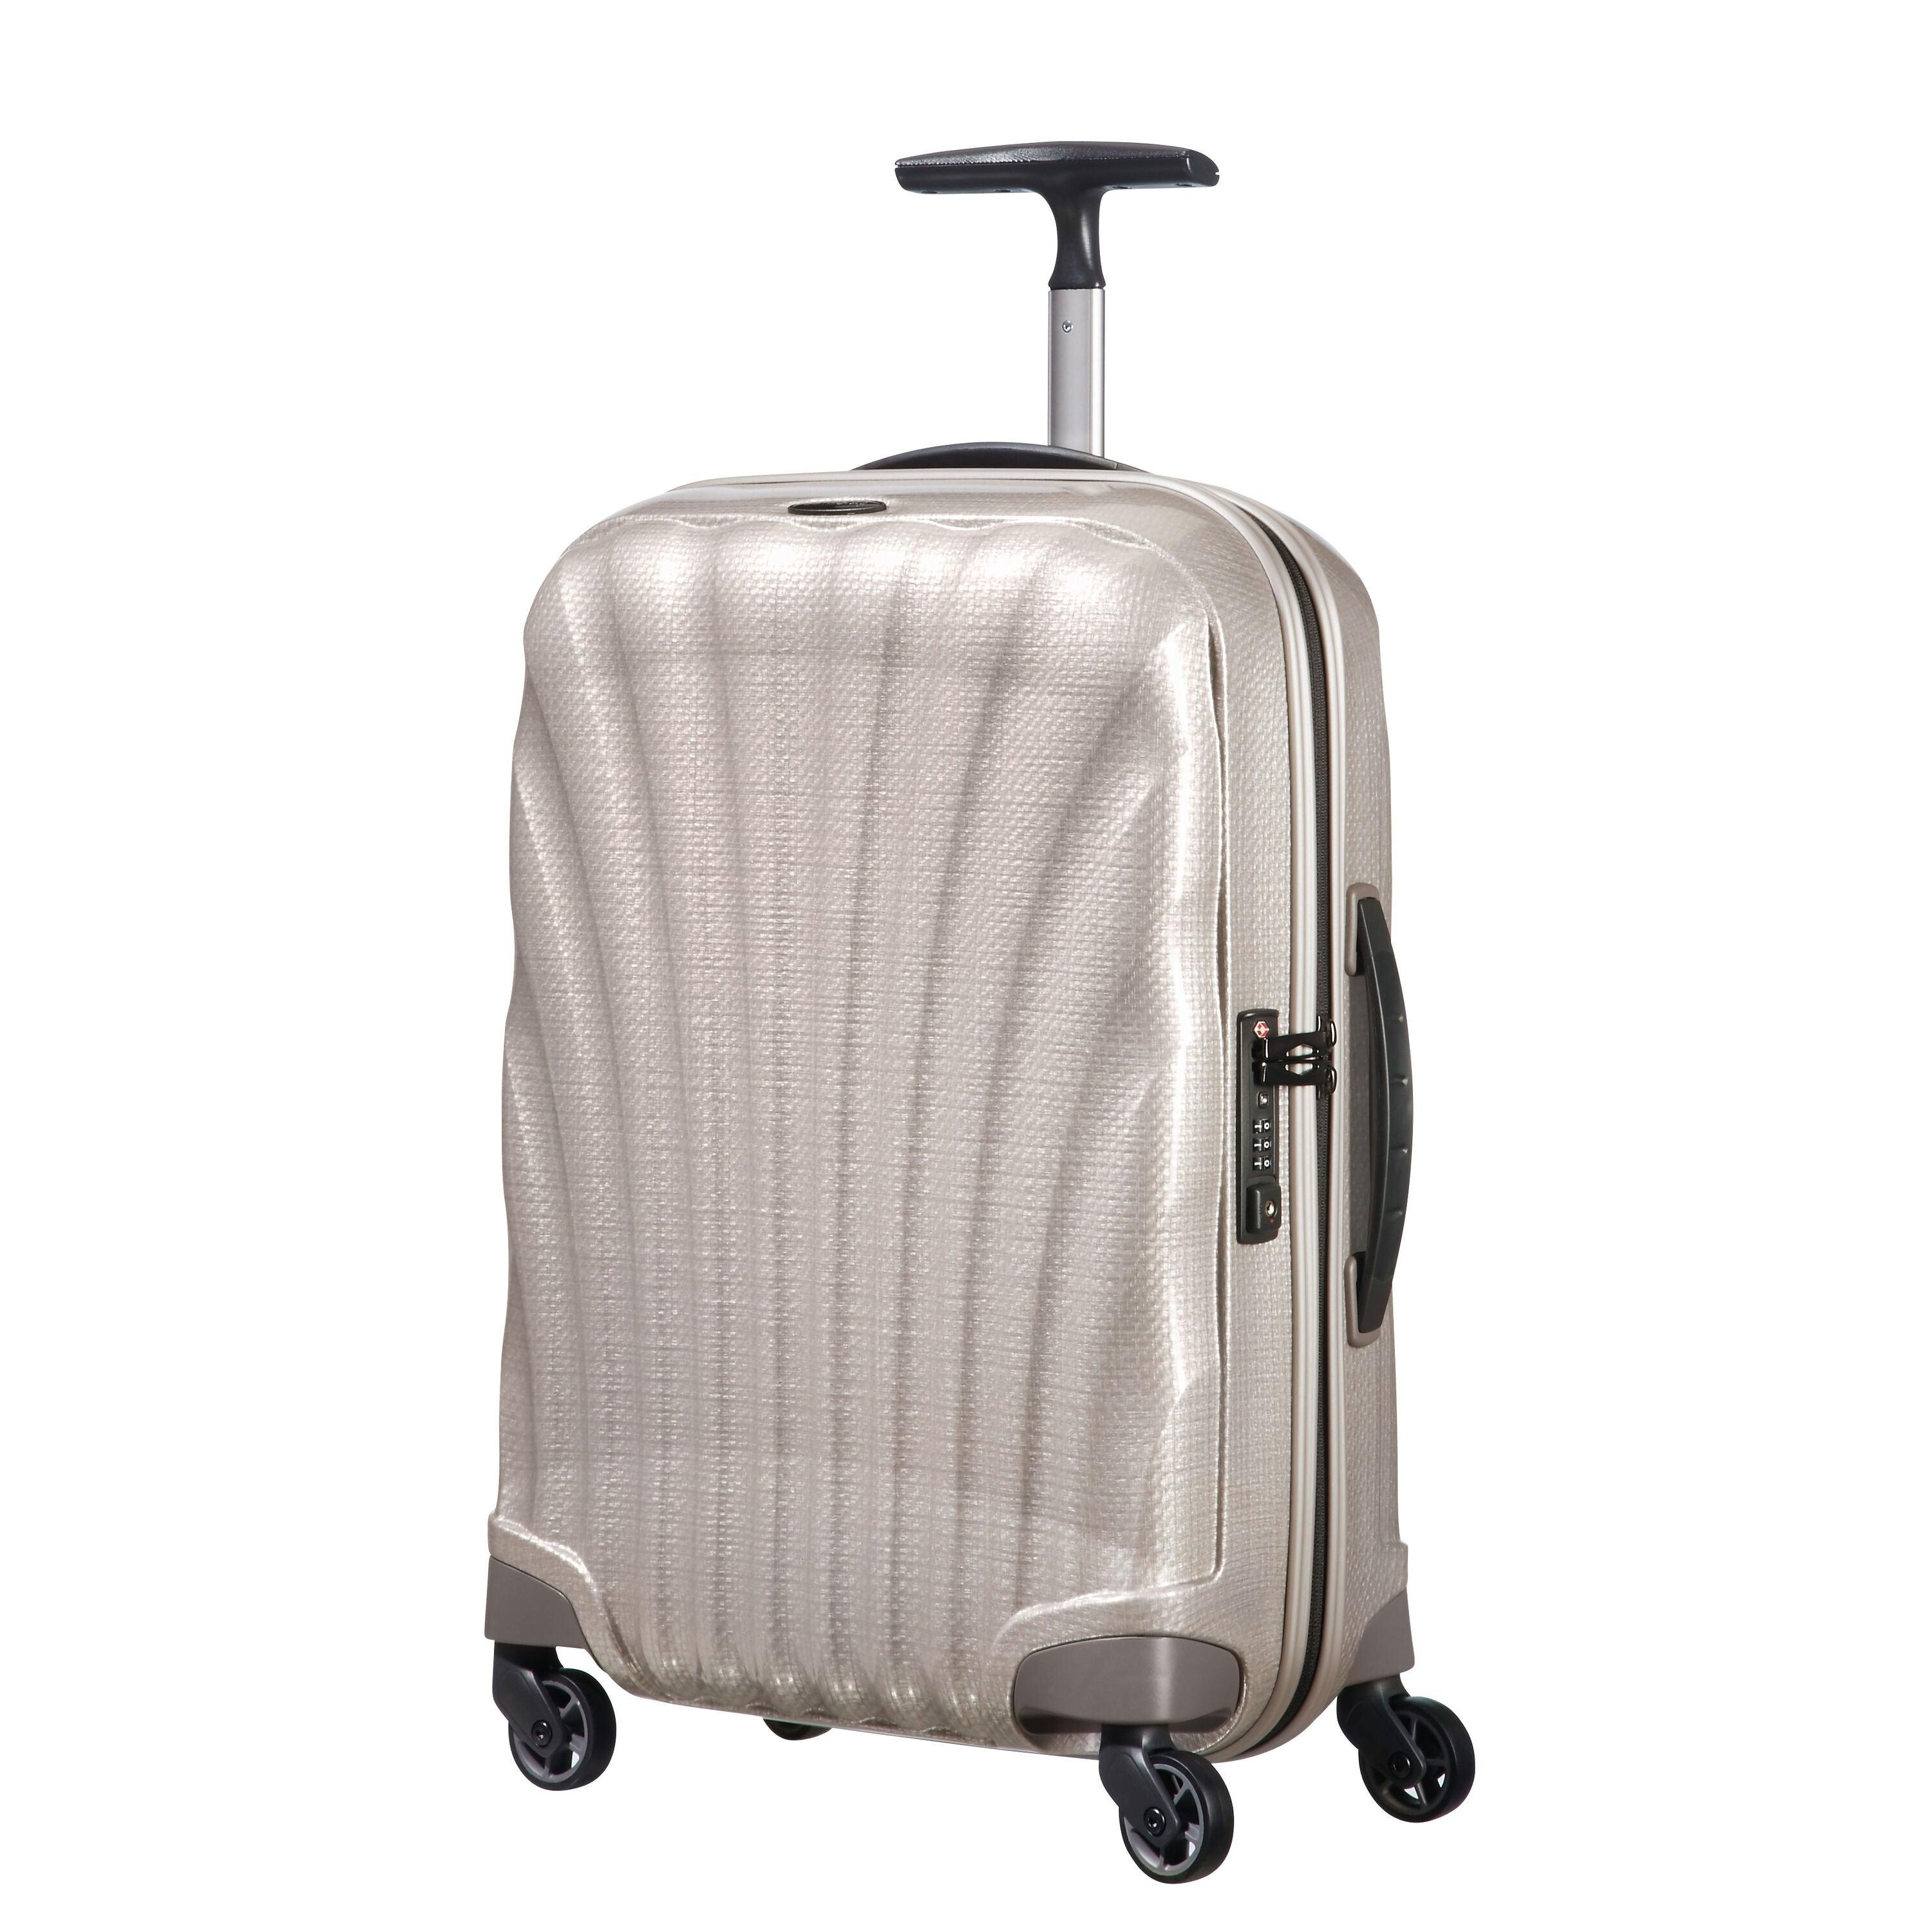 Cosmolite Spinner 20" - Voyage Luggage